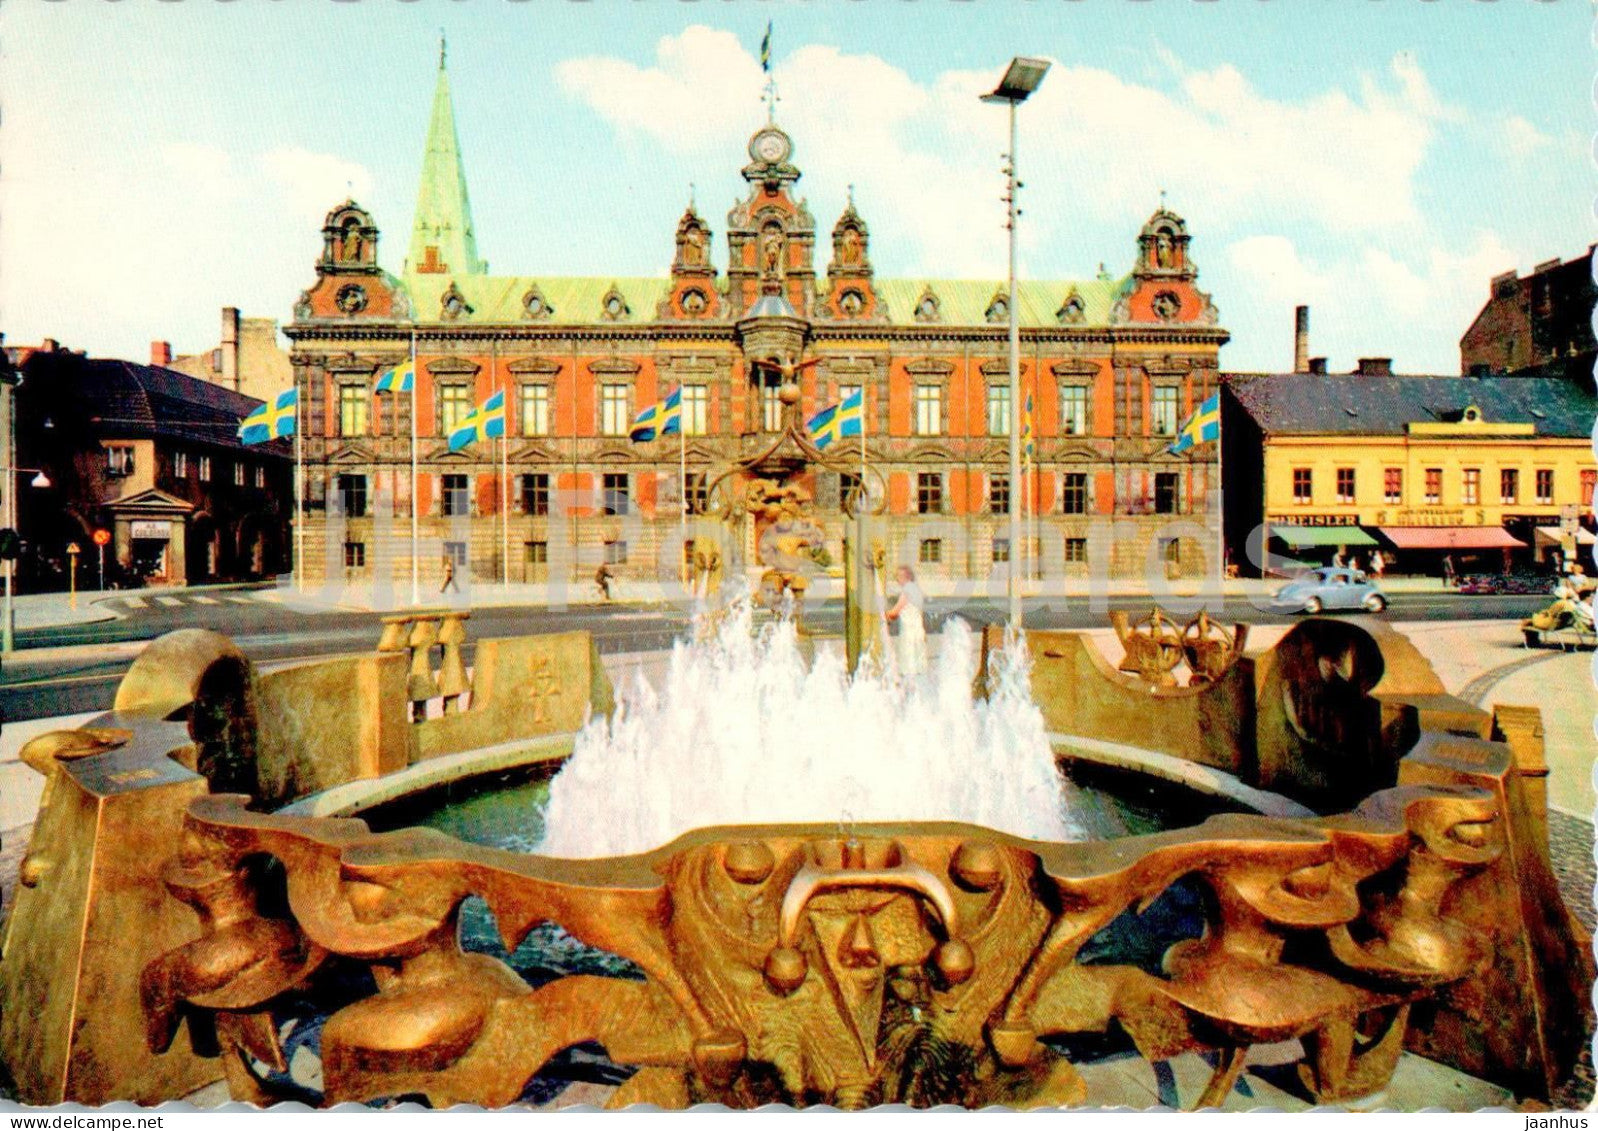 Malmo - Stortorget - square - fountain - 6704-1 - Sweden - unused - JH Postcards